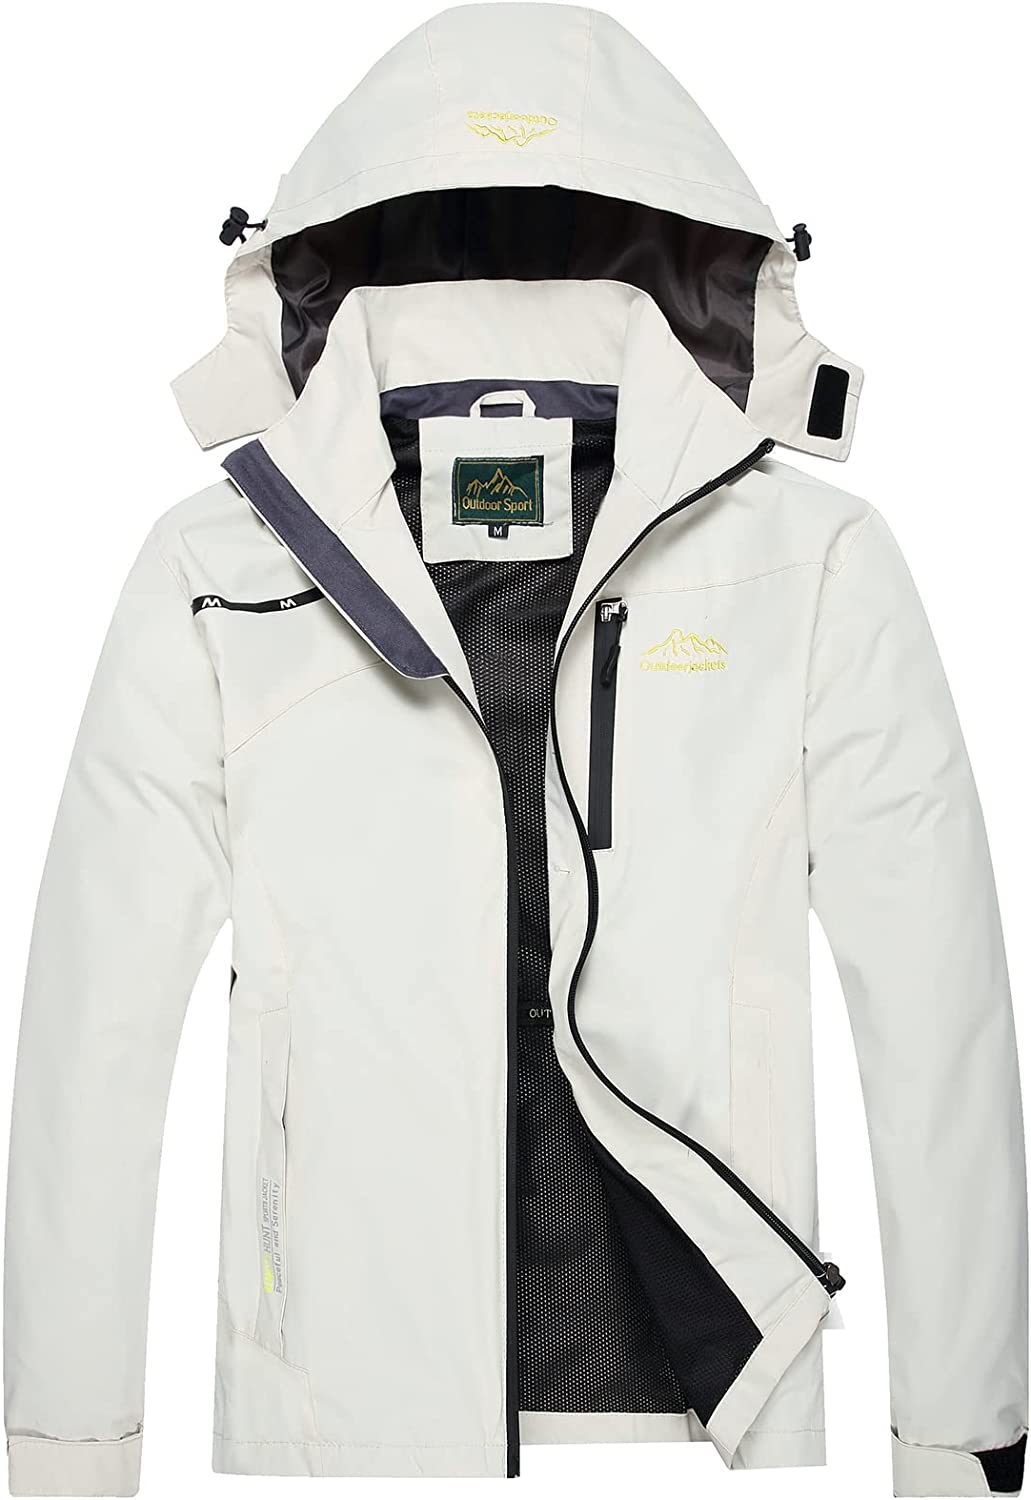 GIISAM Rain Jacket for Men, Mens Waterproof Raincoat Lightweight Rain Jackets Outdoor Rain Coat Windbreaker with Hood